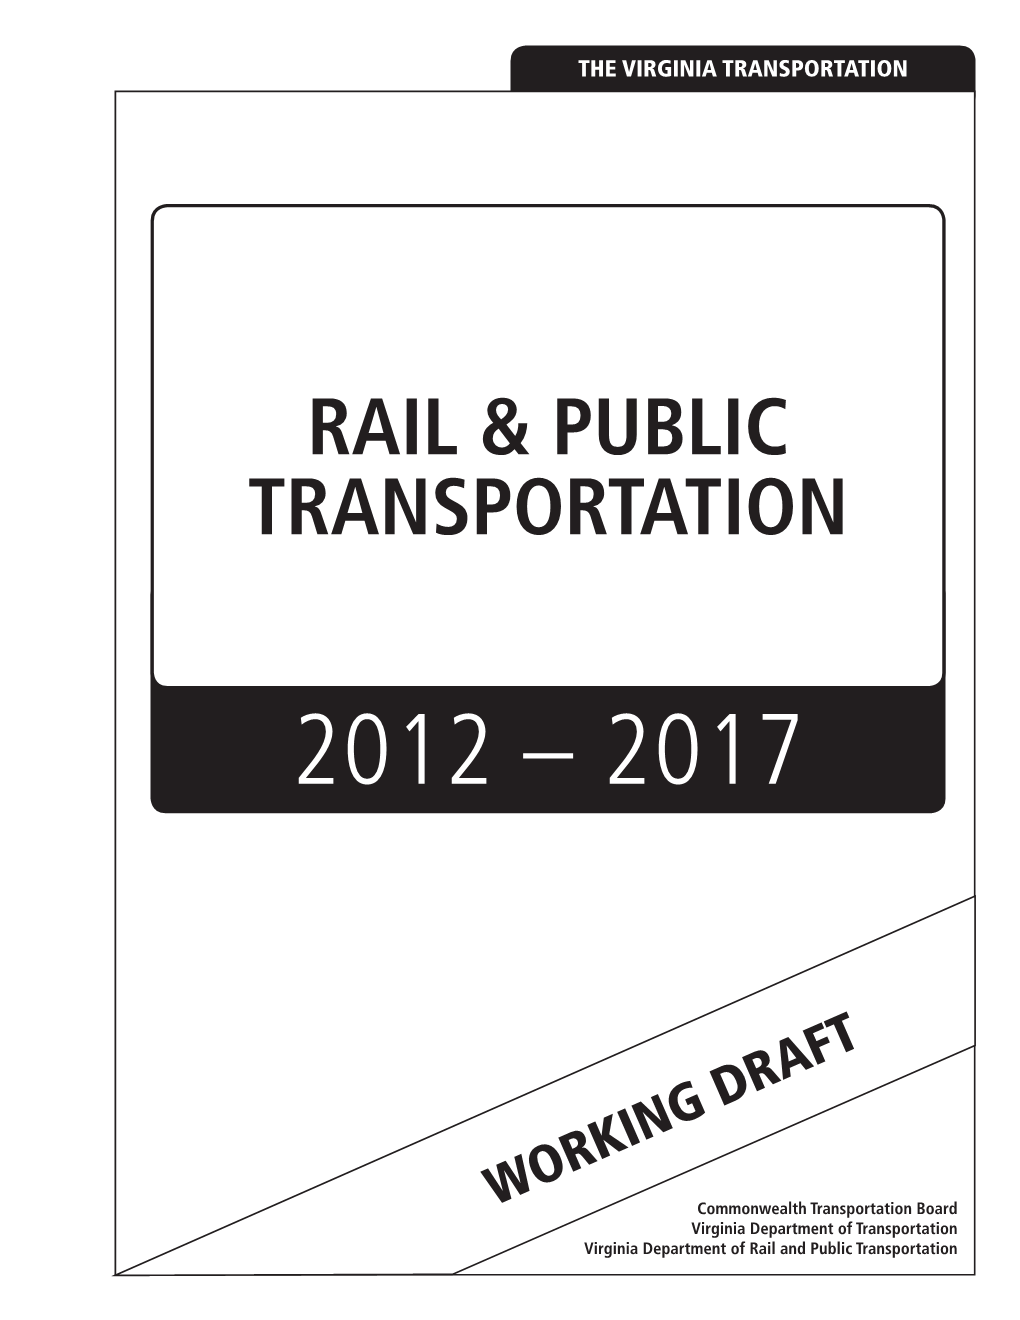 Rail & Public Transportation